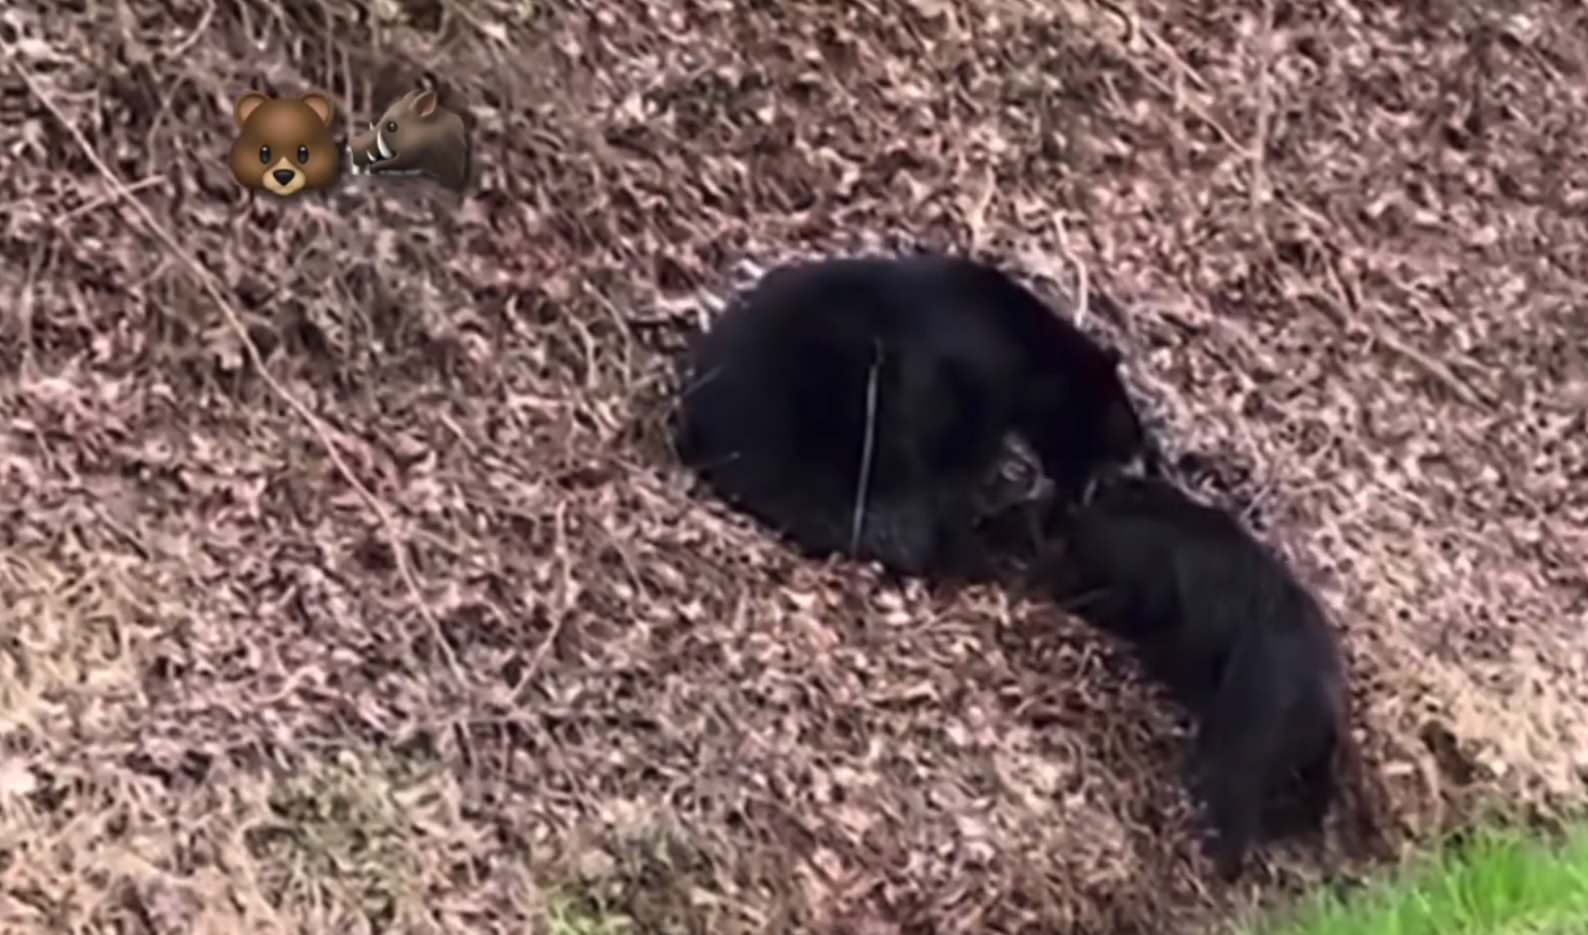 Chocante! Urso mata javali após batalha sangrenta; veja vídeo